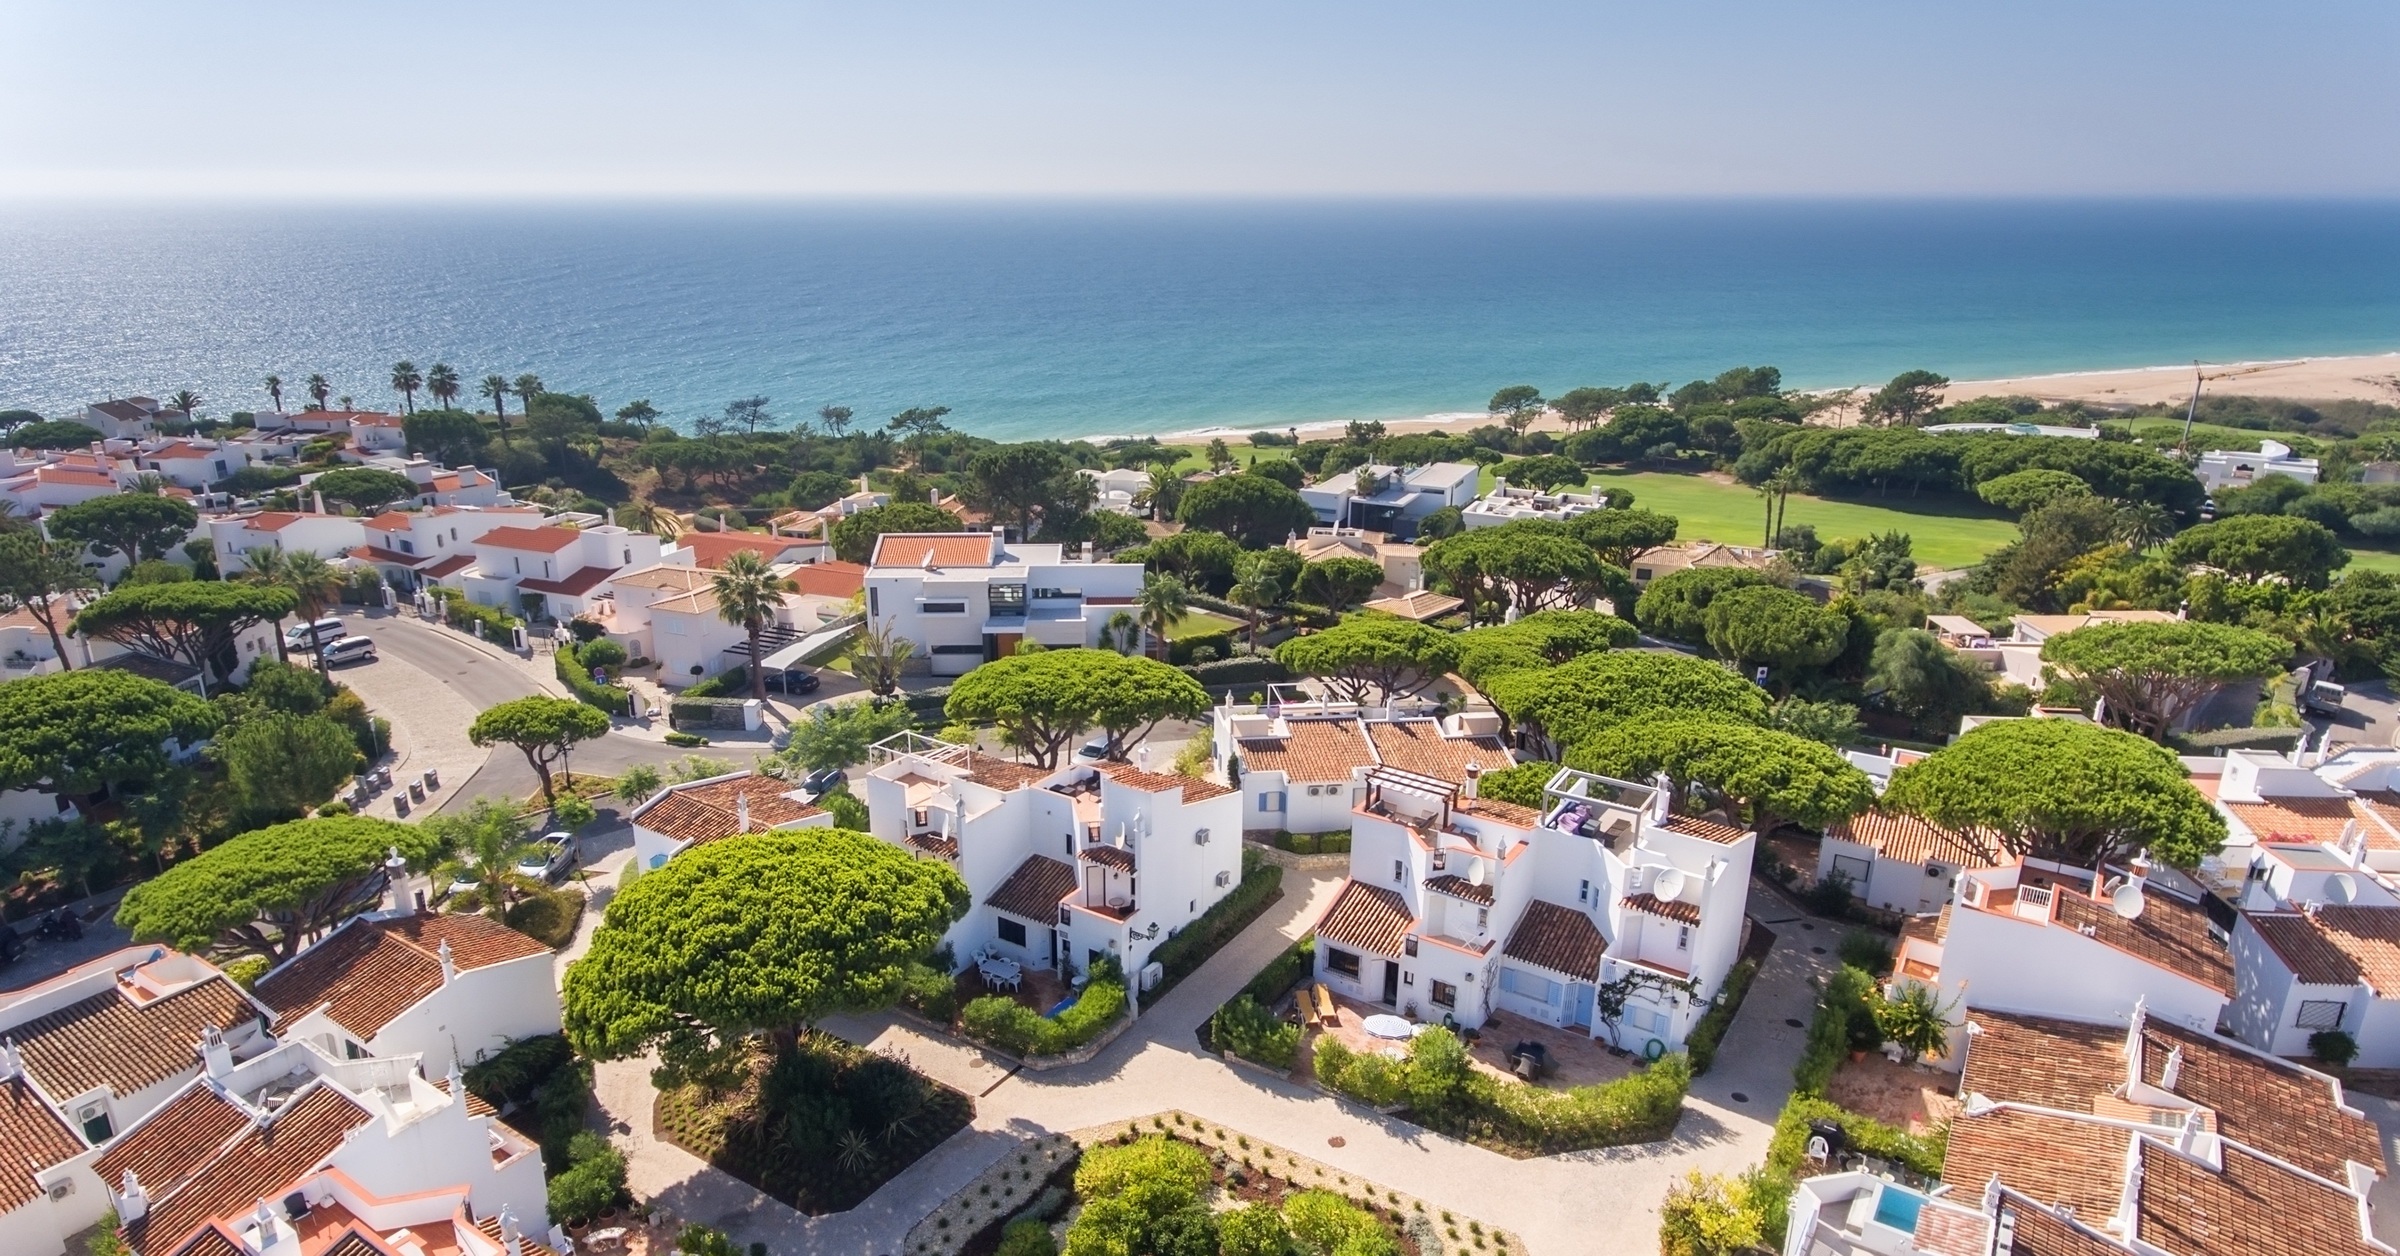 Portugal Golden Visa - Algarve property listings